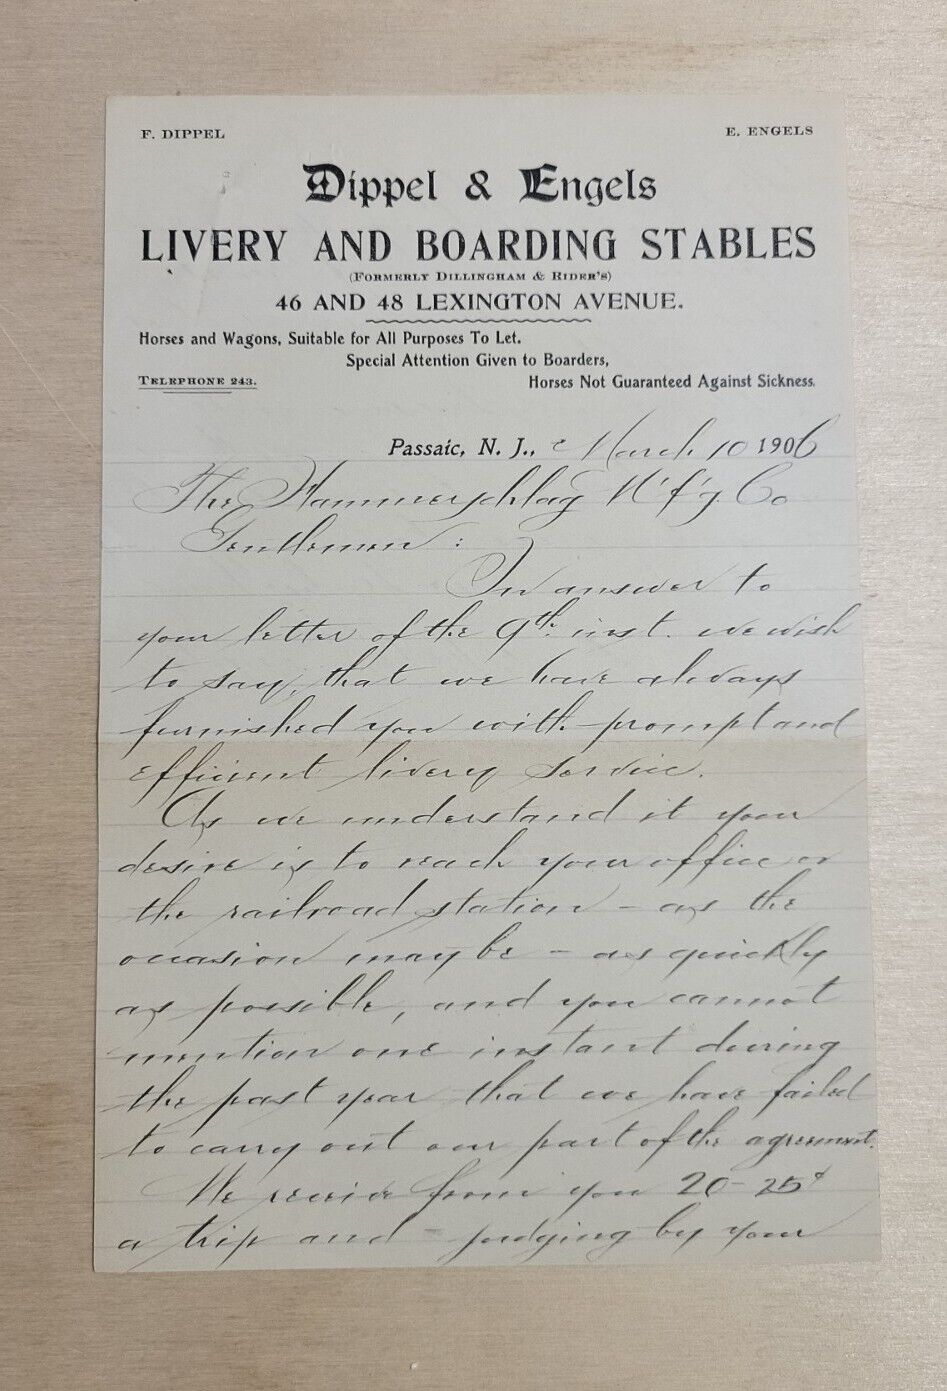 1906 Antique Document, Dippel & Engels Passaic, N. J., Signed